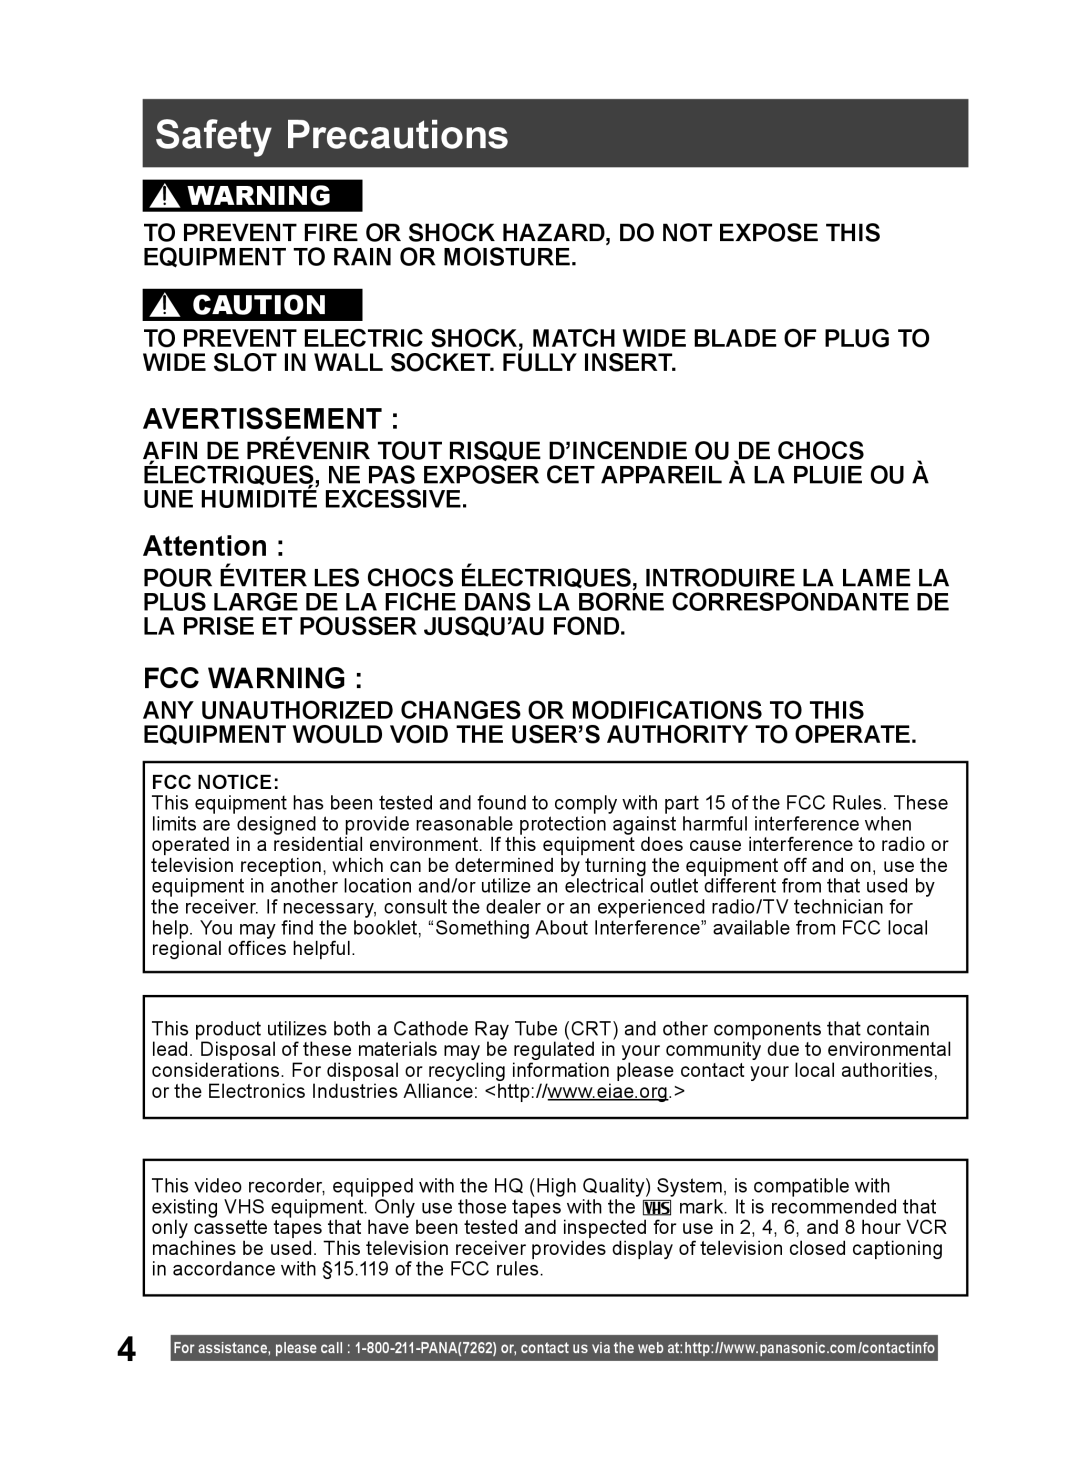 Panasonic PV DF2004, PV DF2704 manual Safety Precautions, Avertissement, Fcc Warning 